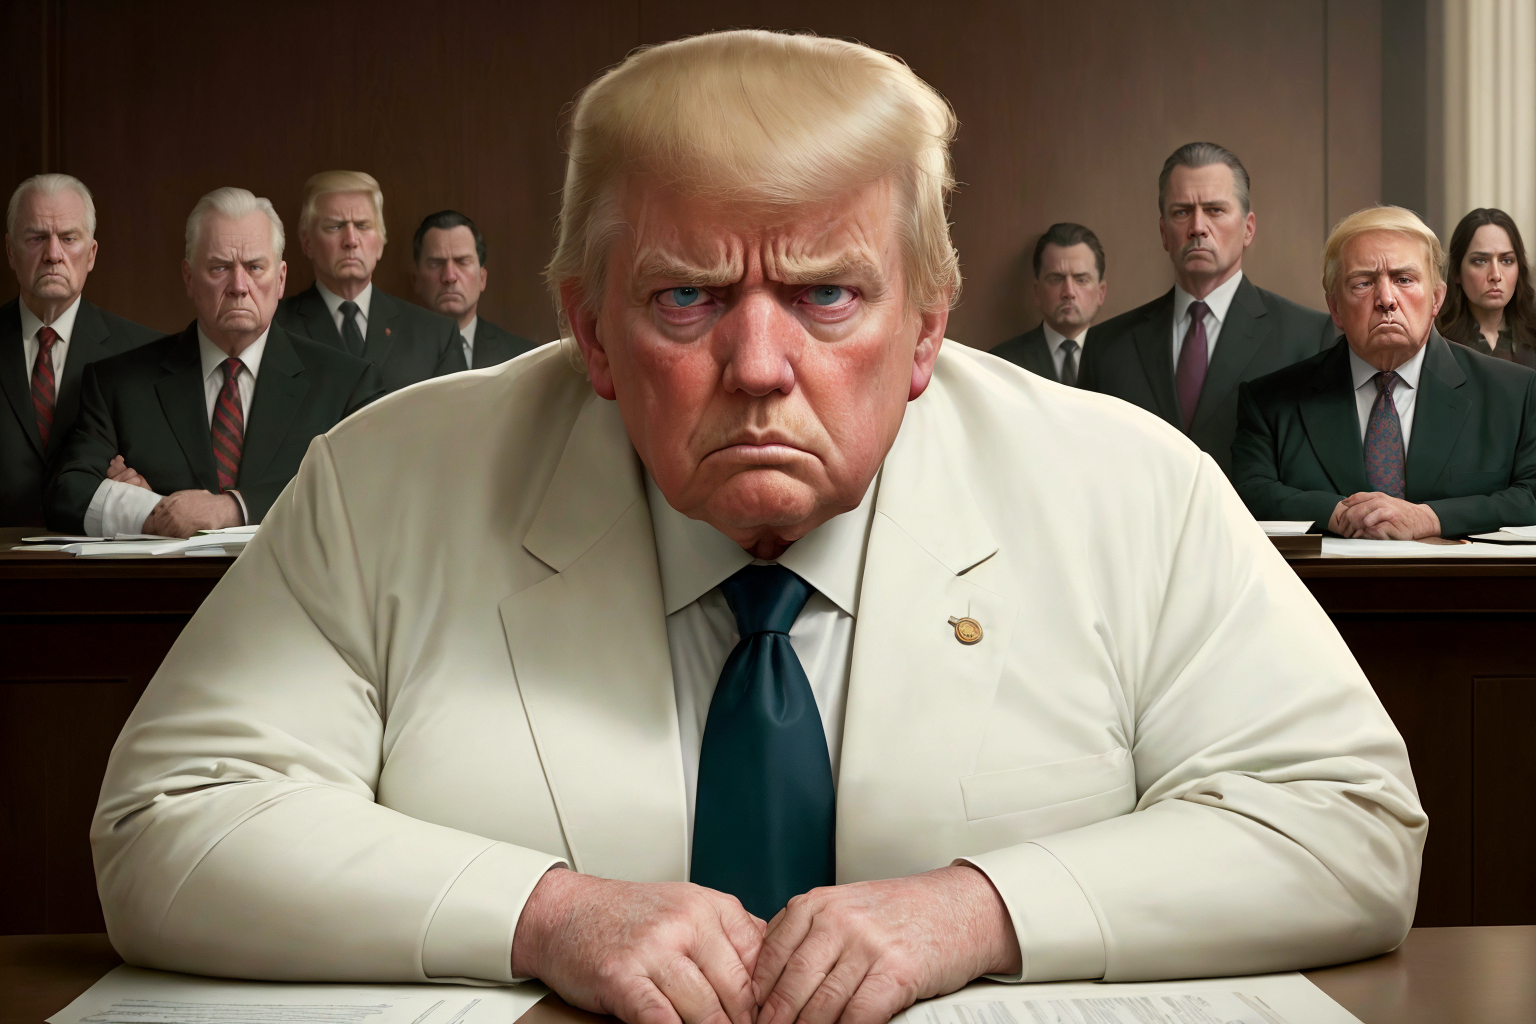 AI-generated image of Donald Trump